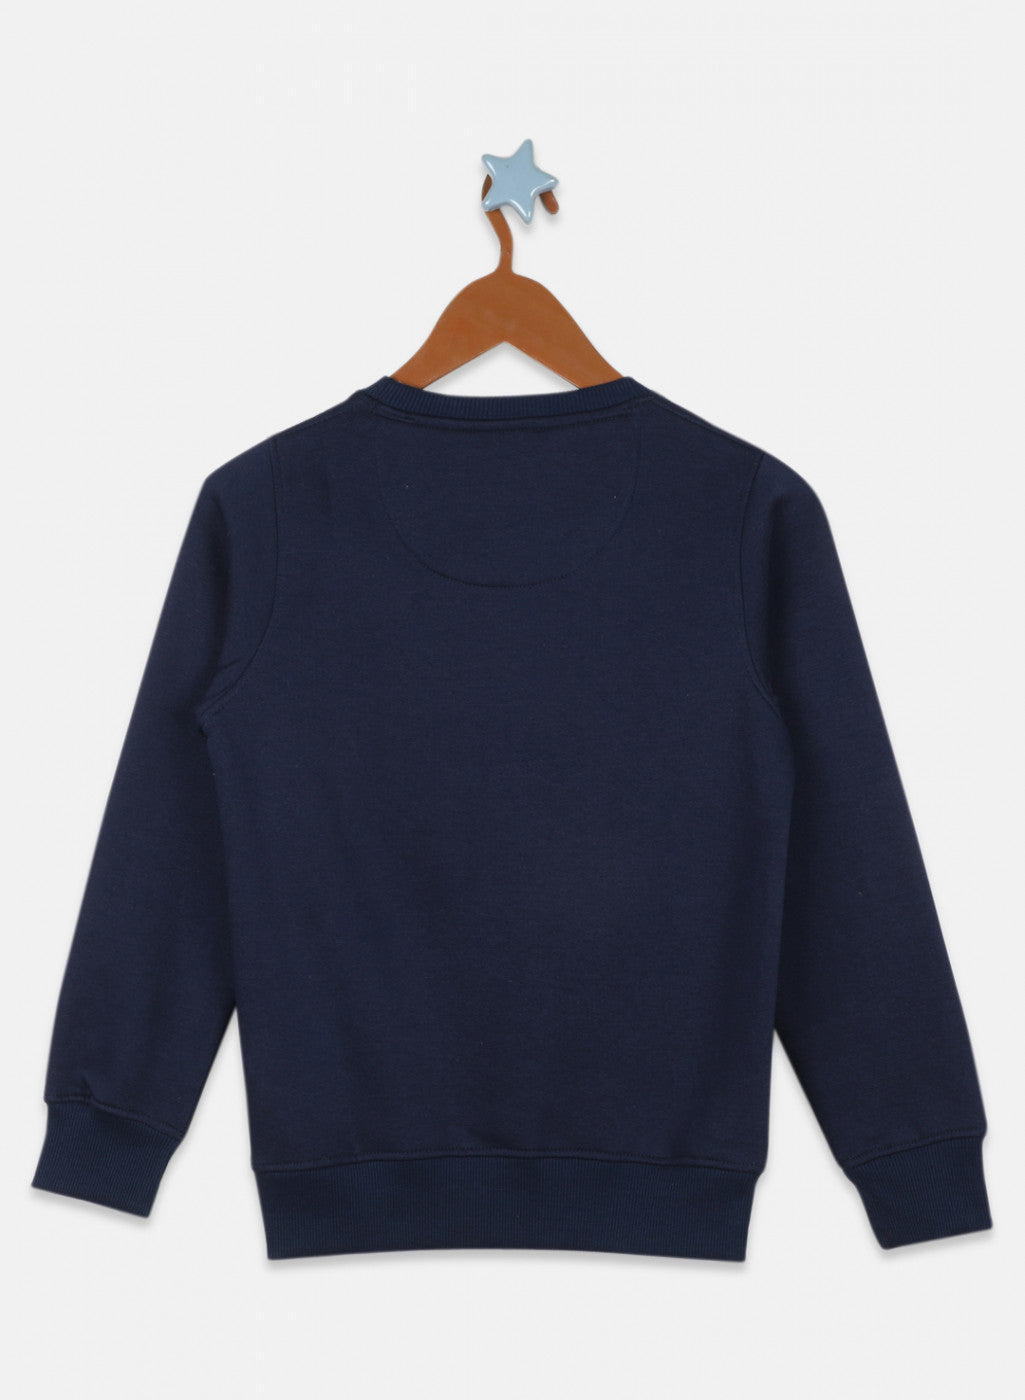 Boys NAvy Blue Printed Sweatshirt